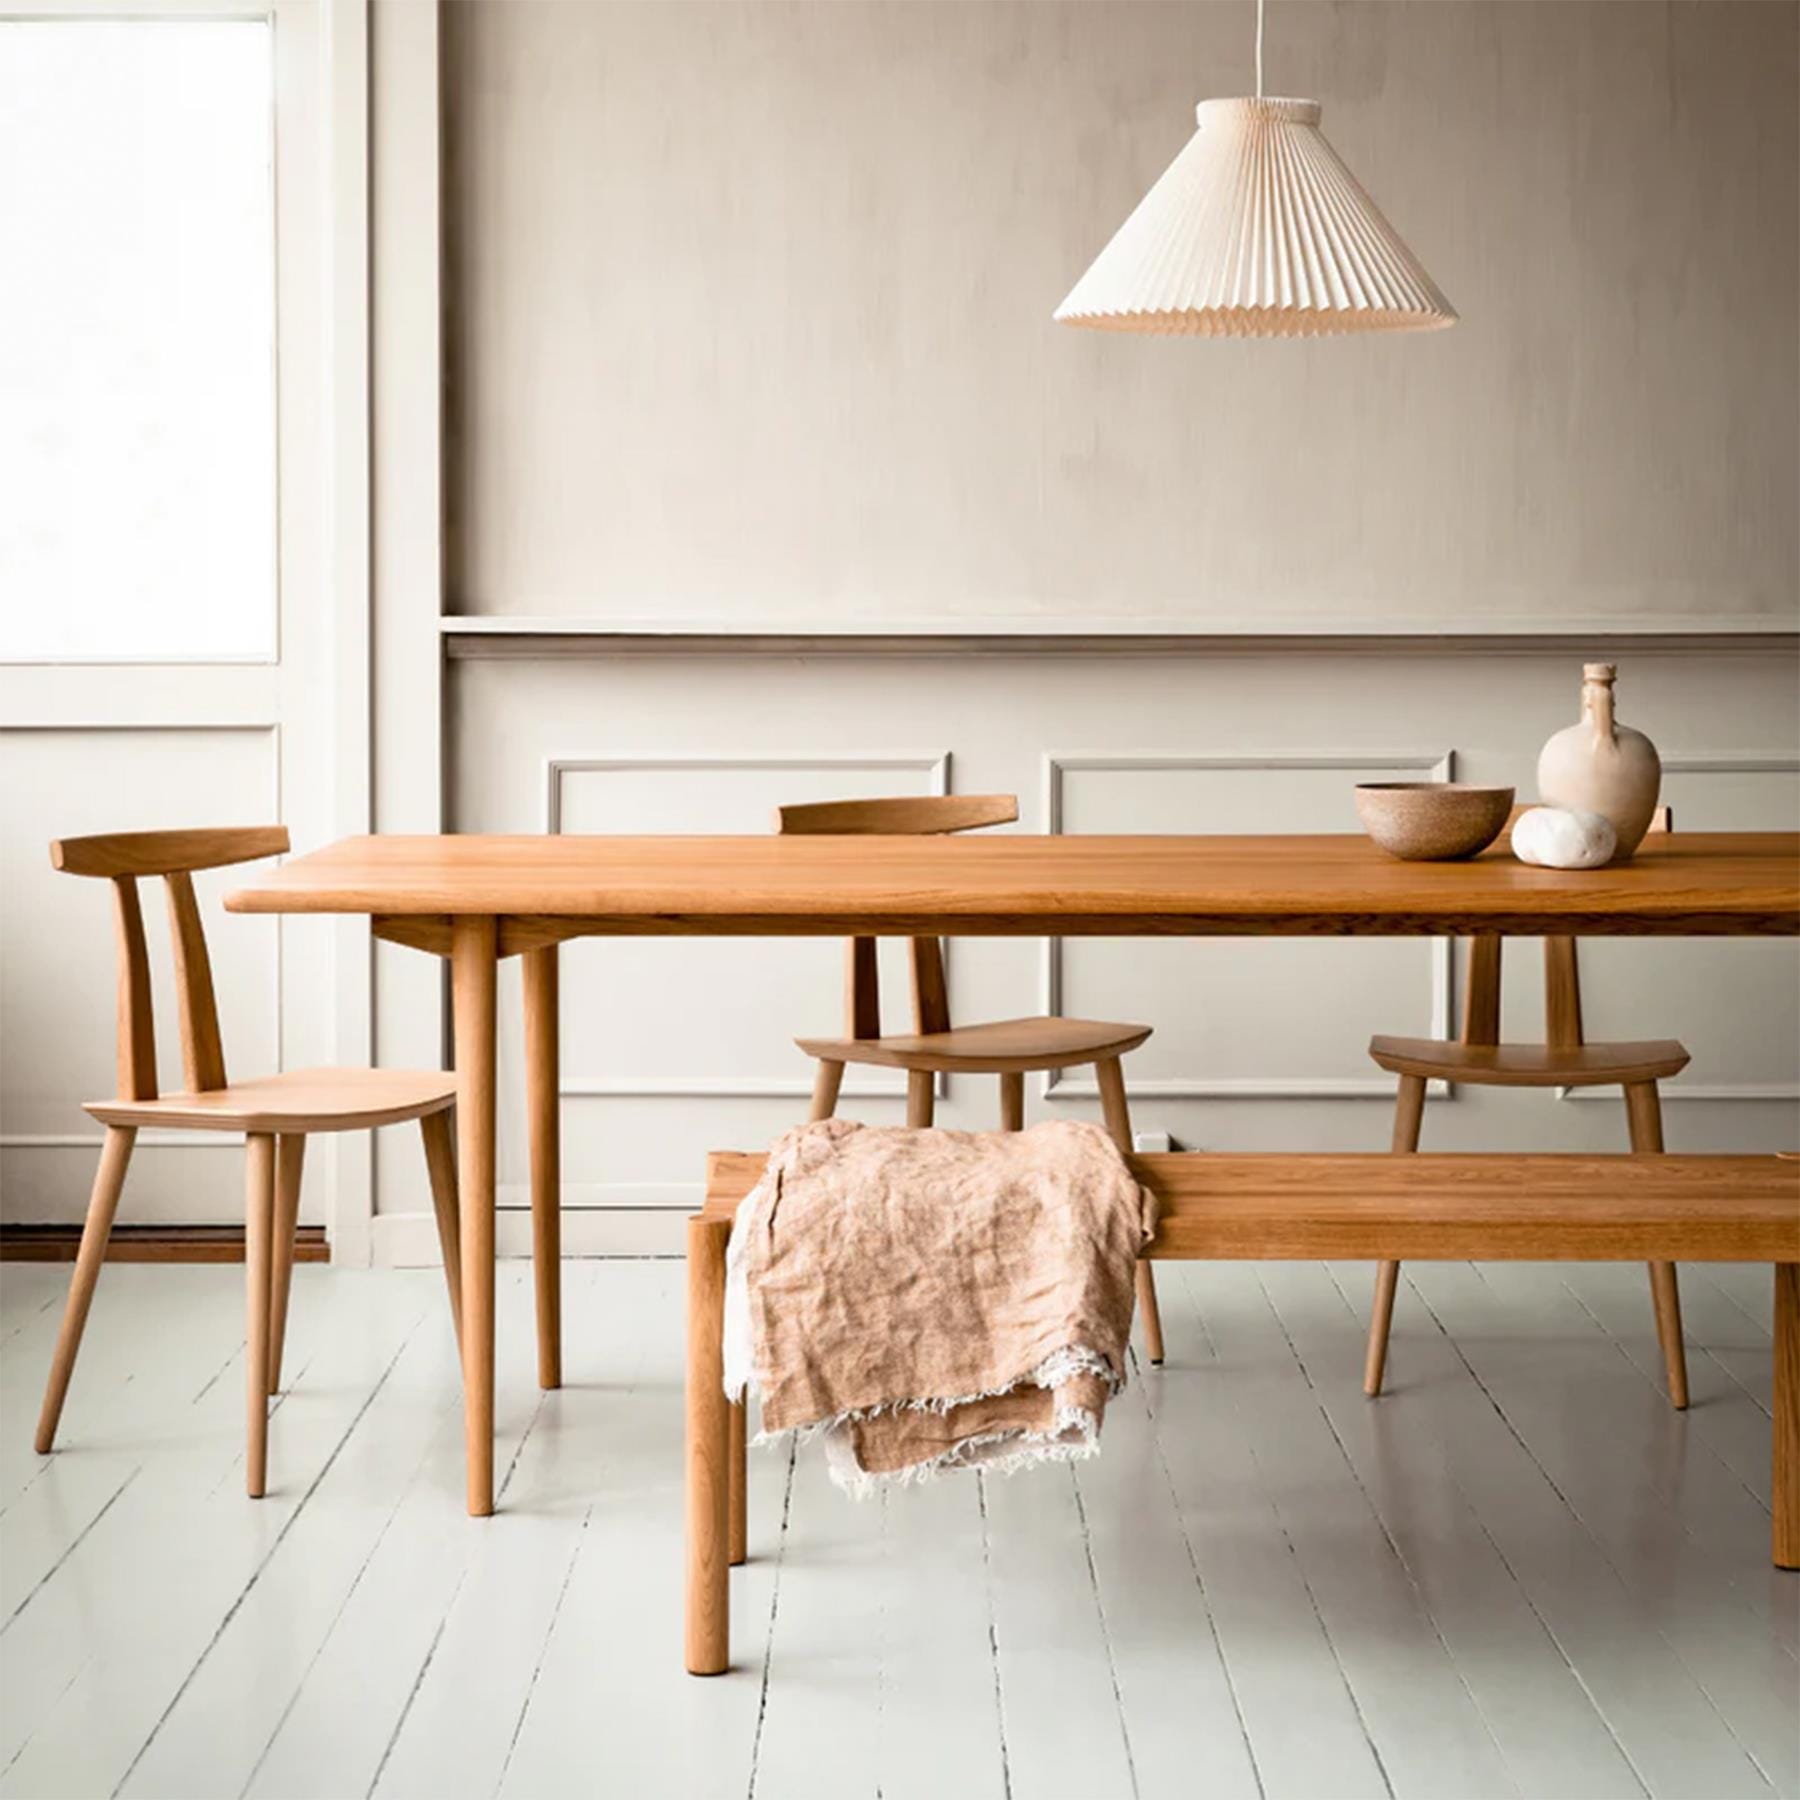 Make Nordic Holmen Rectangular Dining Table Large Natural Oak Length 240cm Width 92cm Without Extra Leaves Light Wood Designer Furniture From